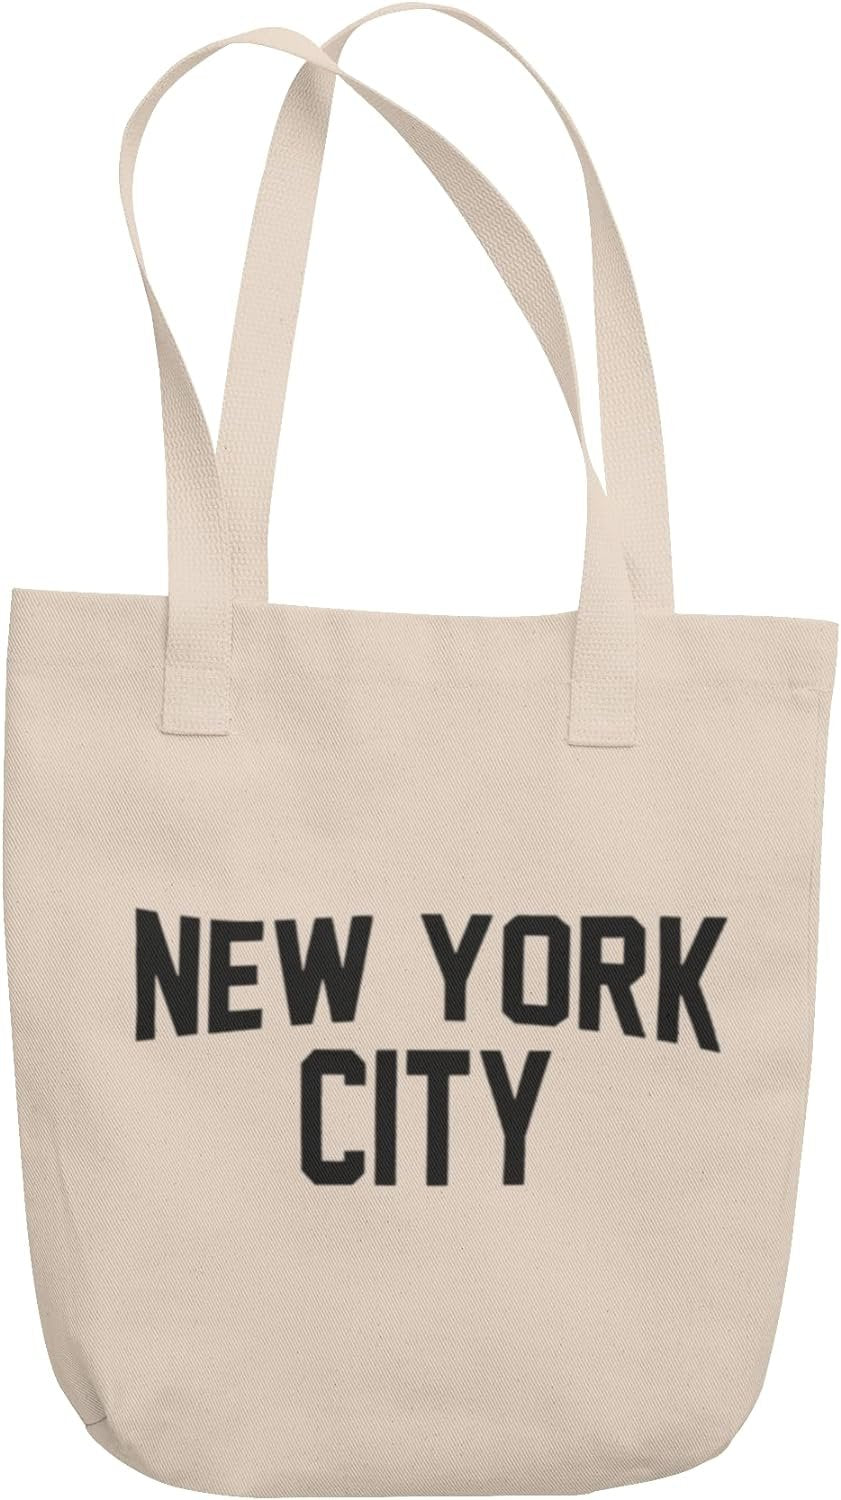 New York City - Simple Tote Bag - Vintage Style Retro NYC Cotton Canvas